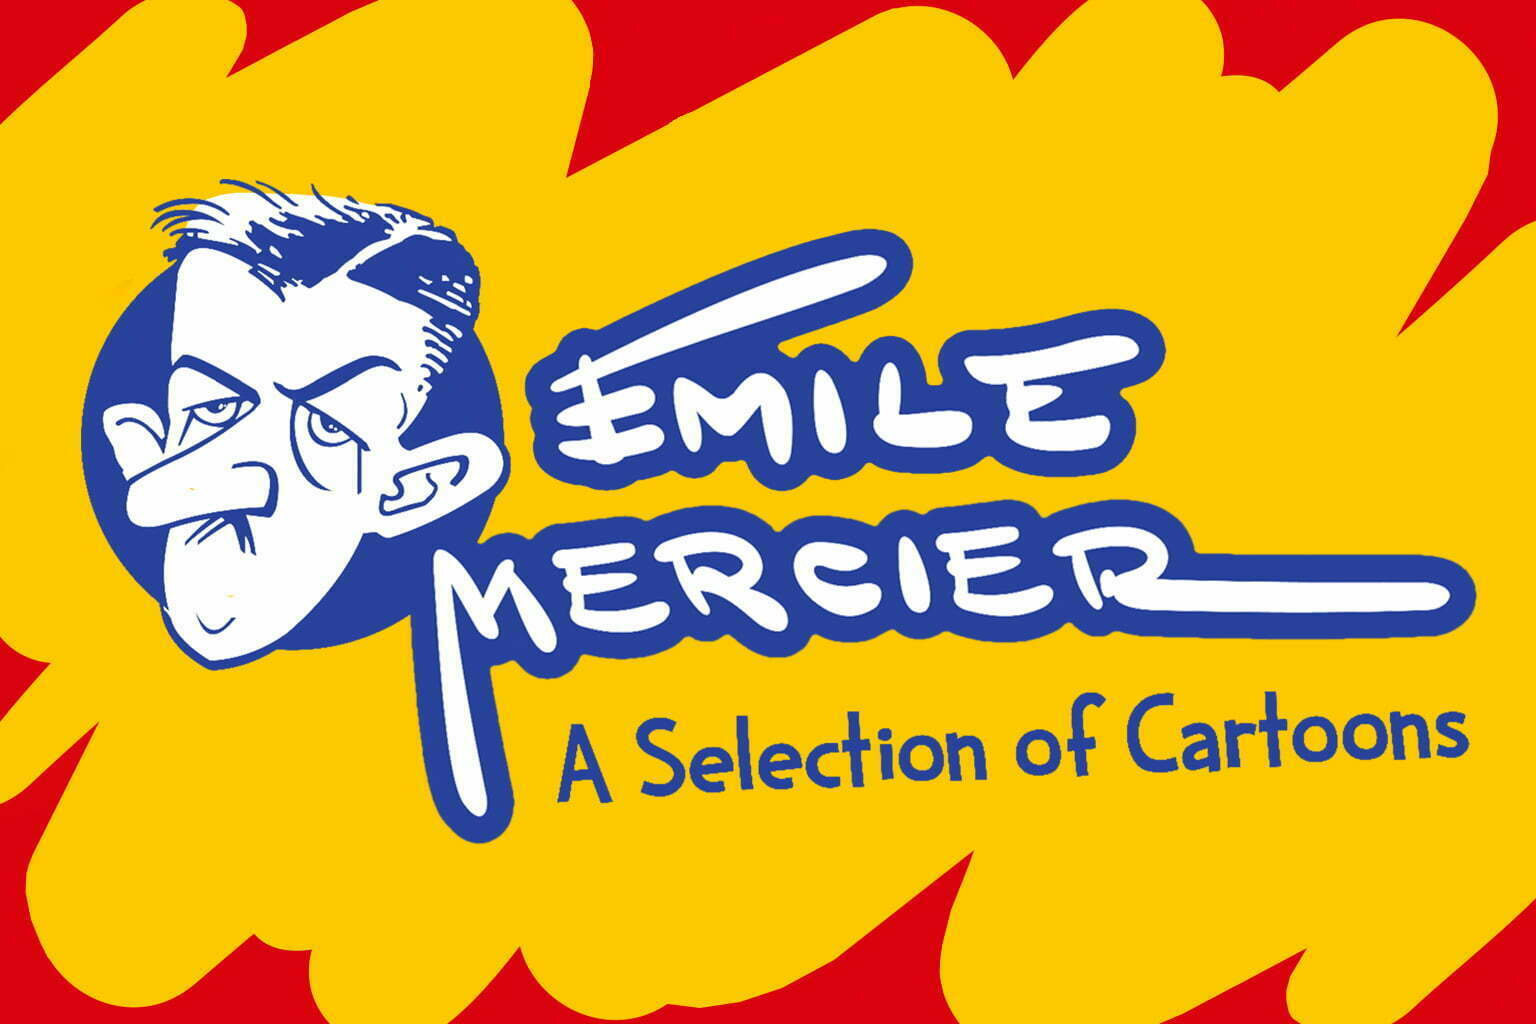 Emile Mercier - A selection of Cartoons